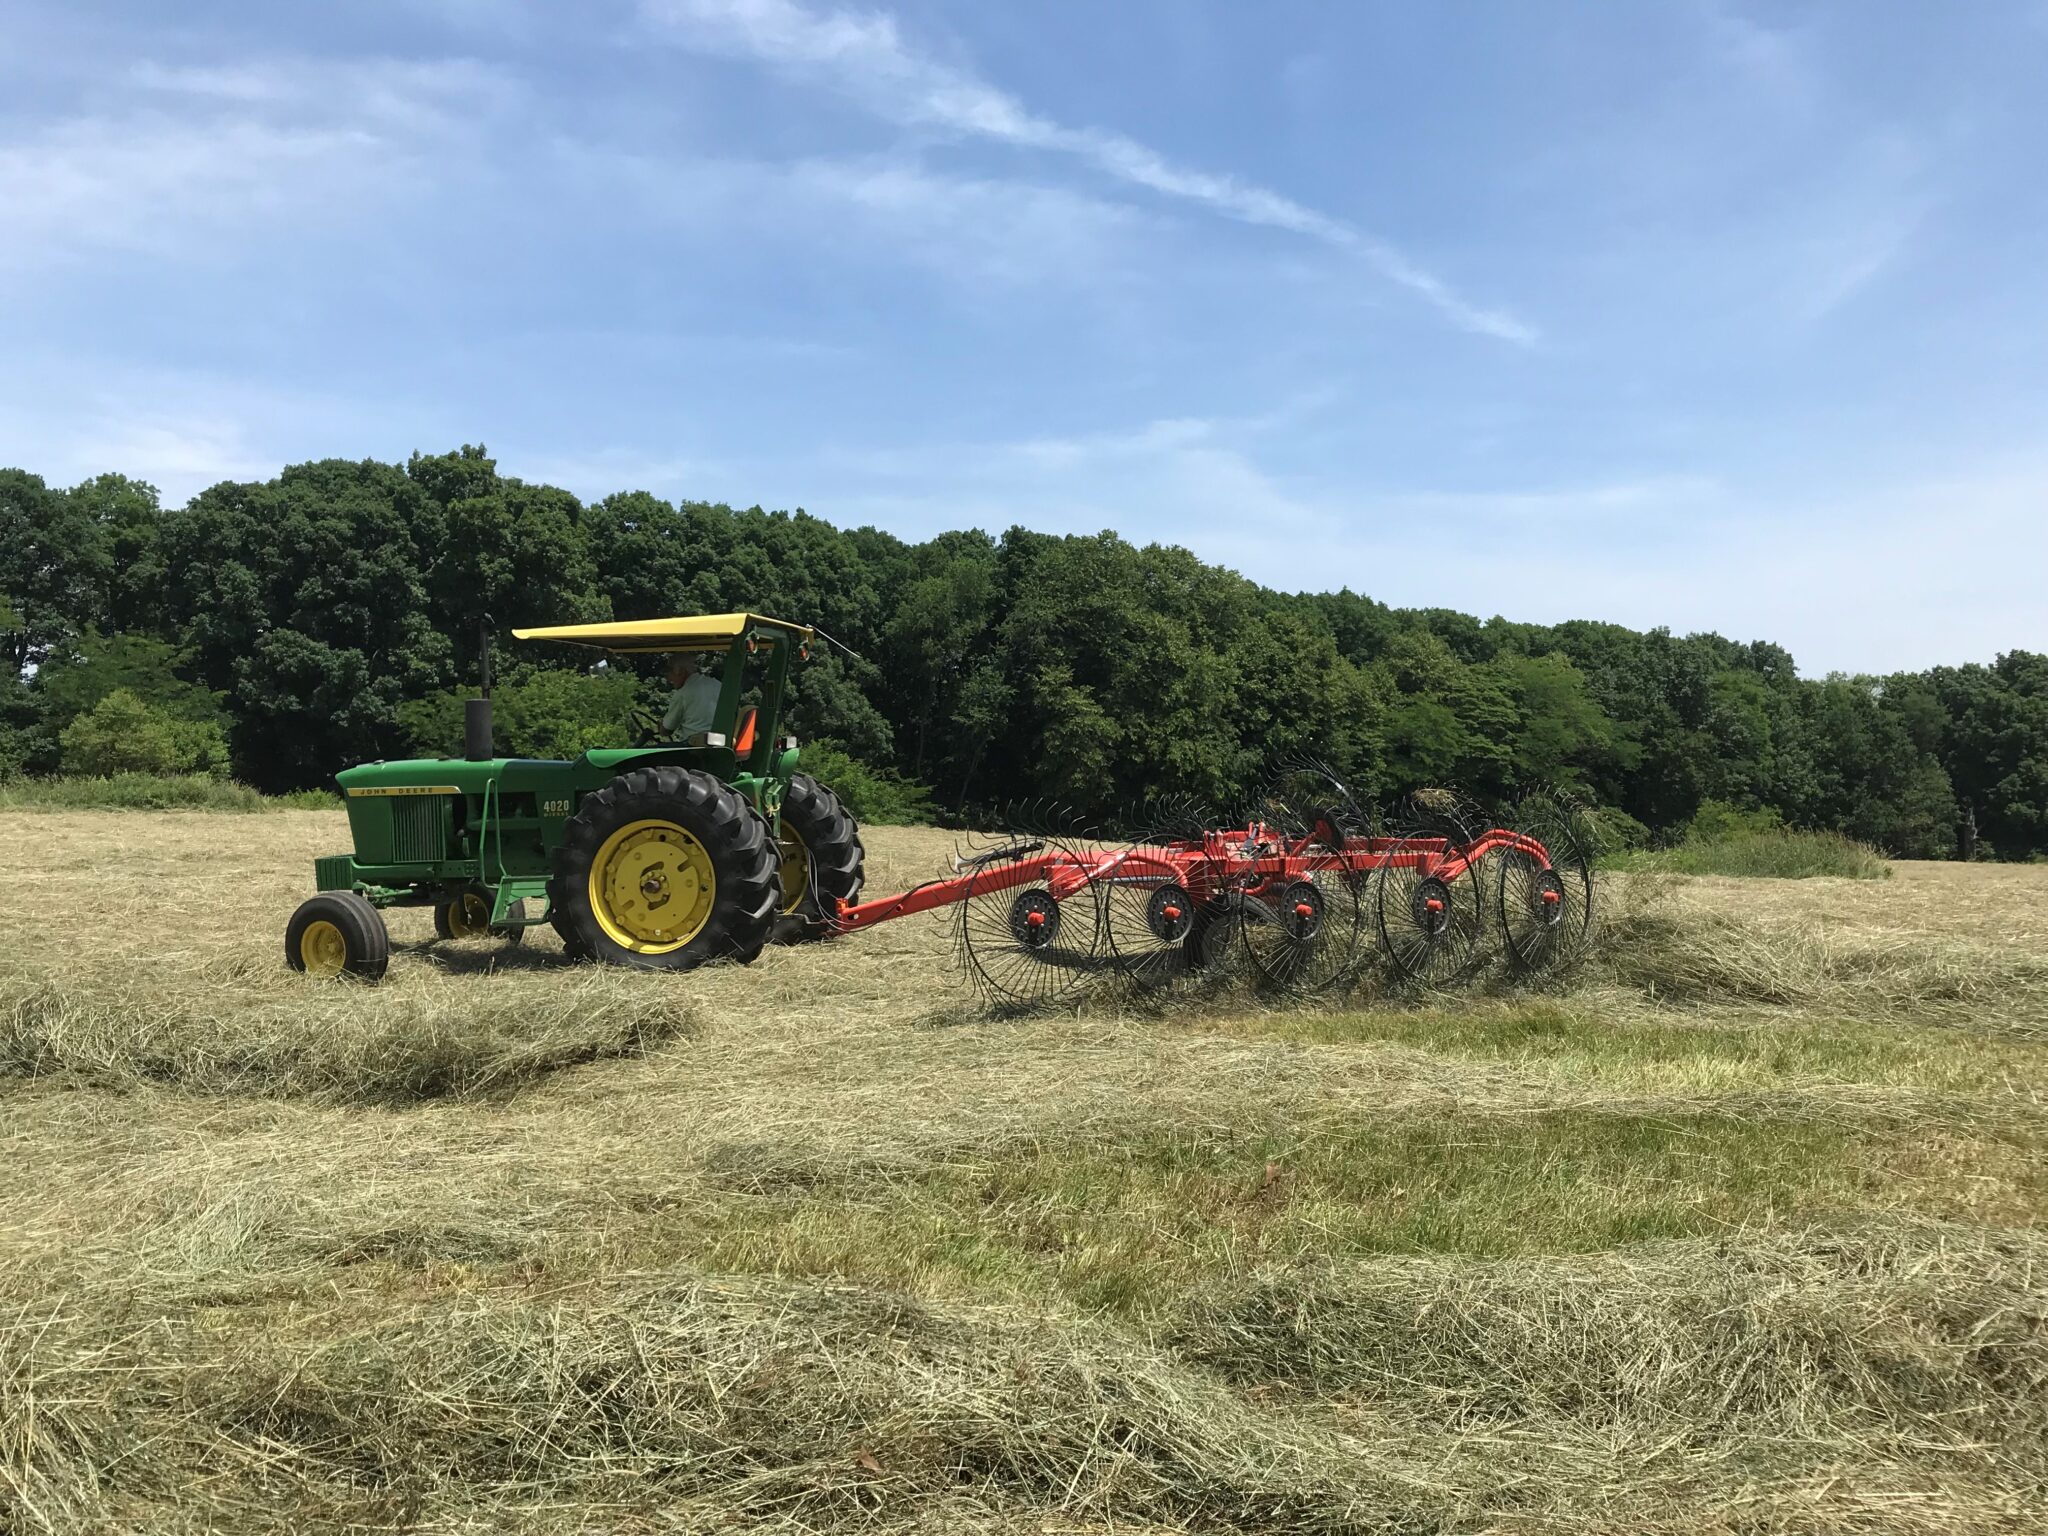 Raking hay into a windrow before baling occurs. (Photo Credit: Keith Johnson)